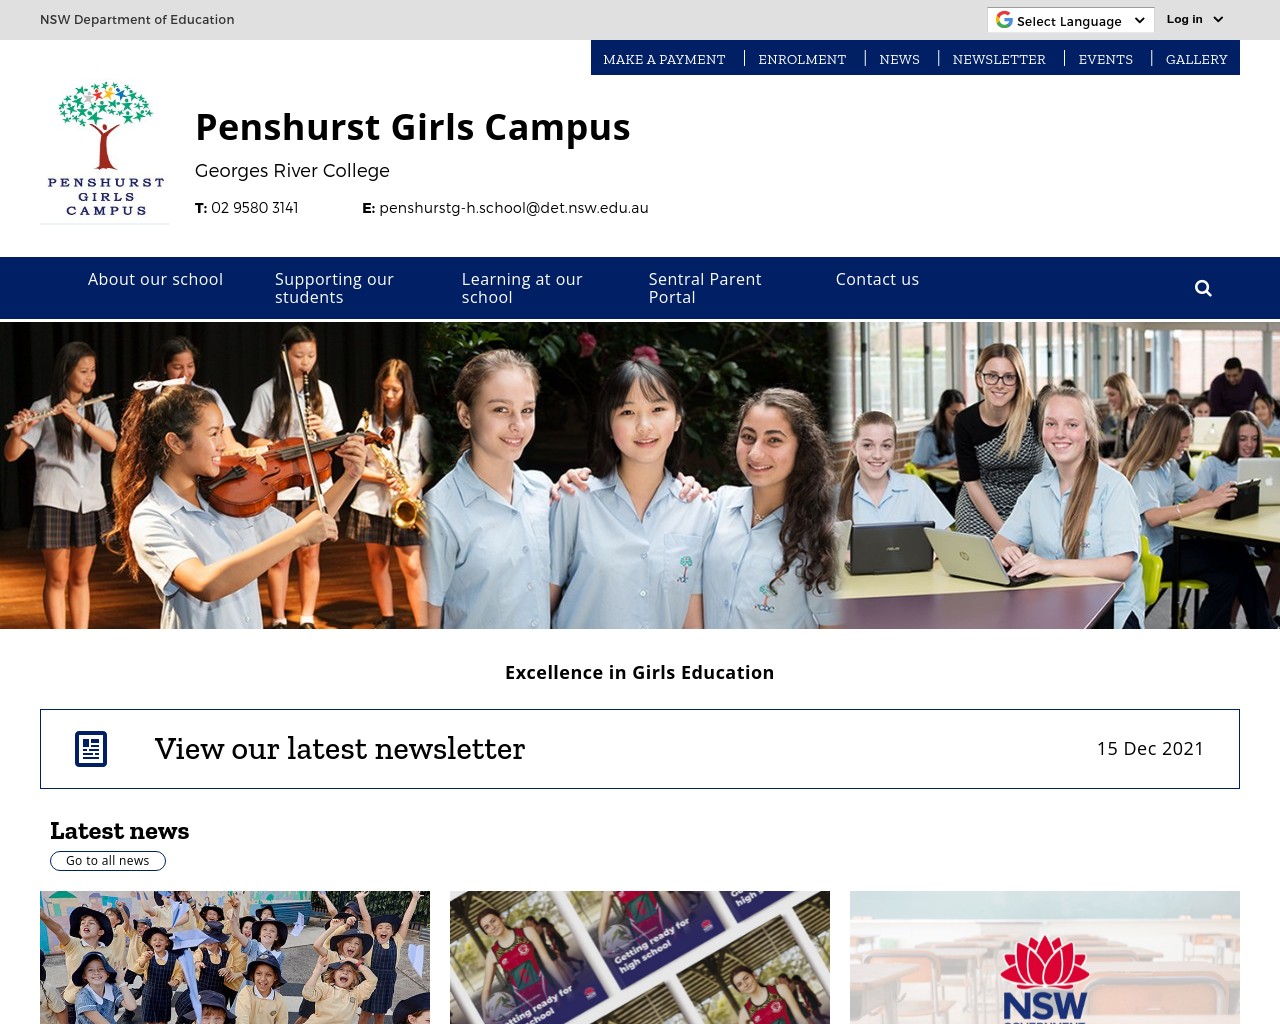 George River College Penshurst Girls Campus